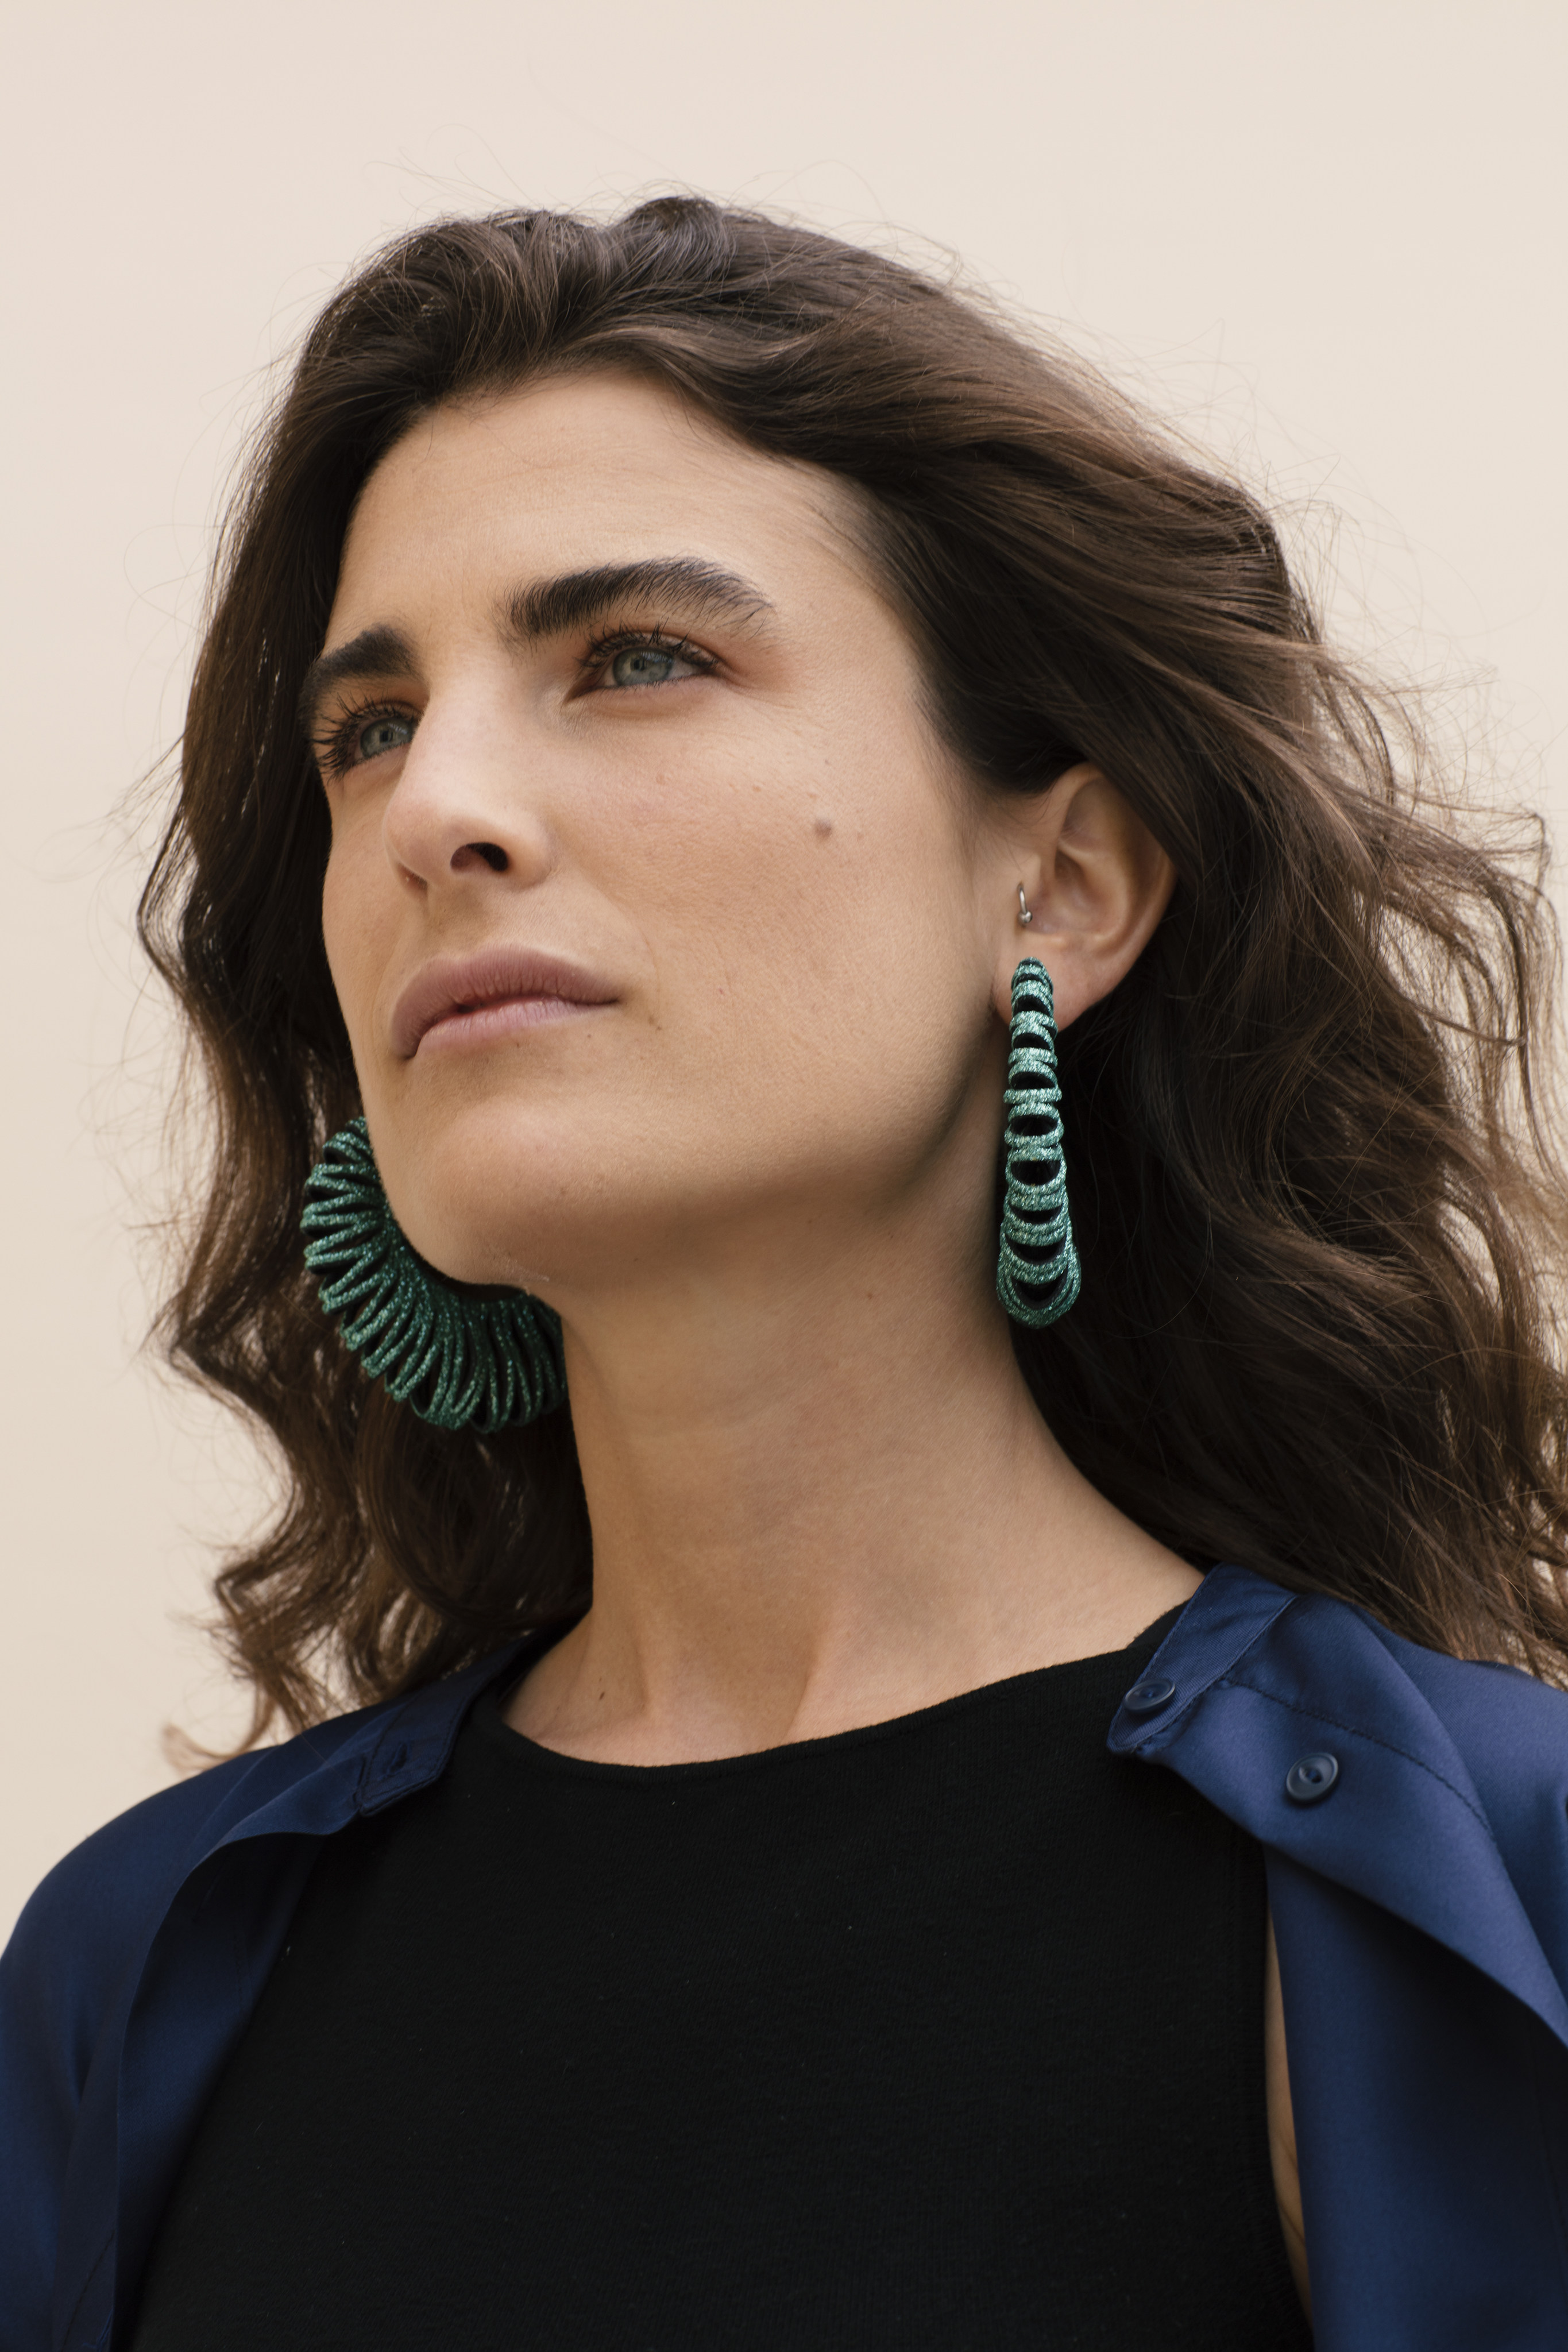 Maria Sole Ferragamo is the edgy jewellery designer and founder of So-Le Studio, and Salvatore Ferragamo’s great-granddaughter. Photos: Handout